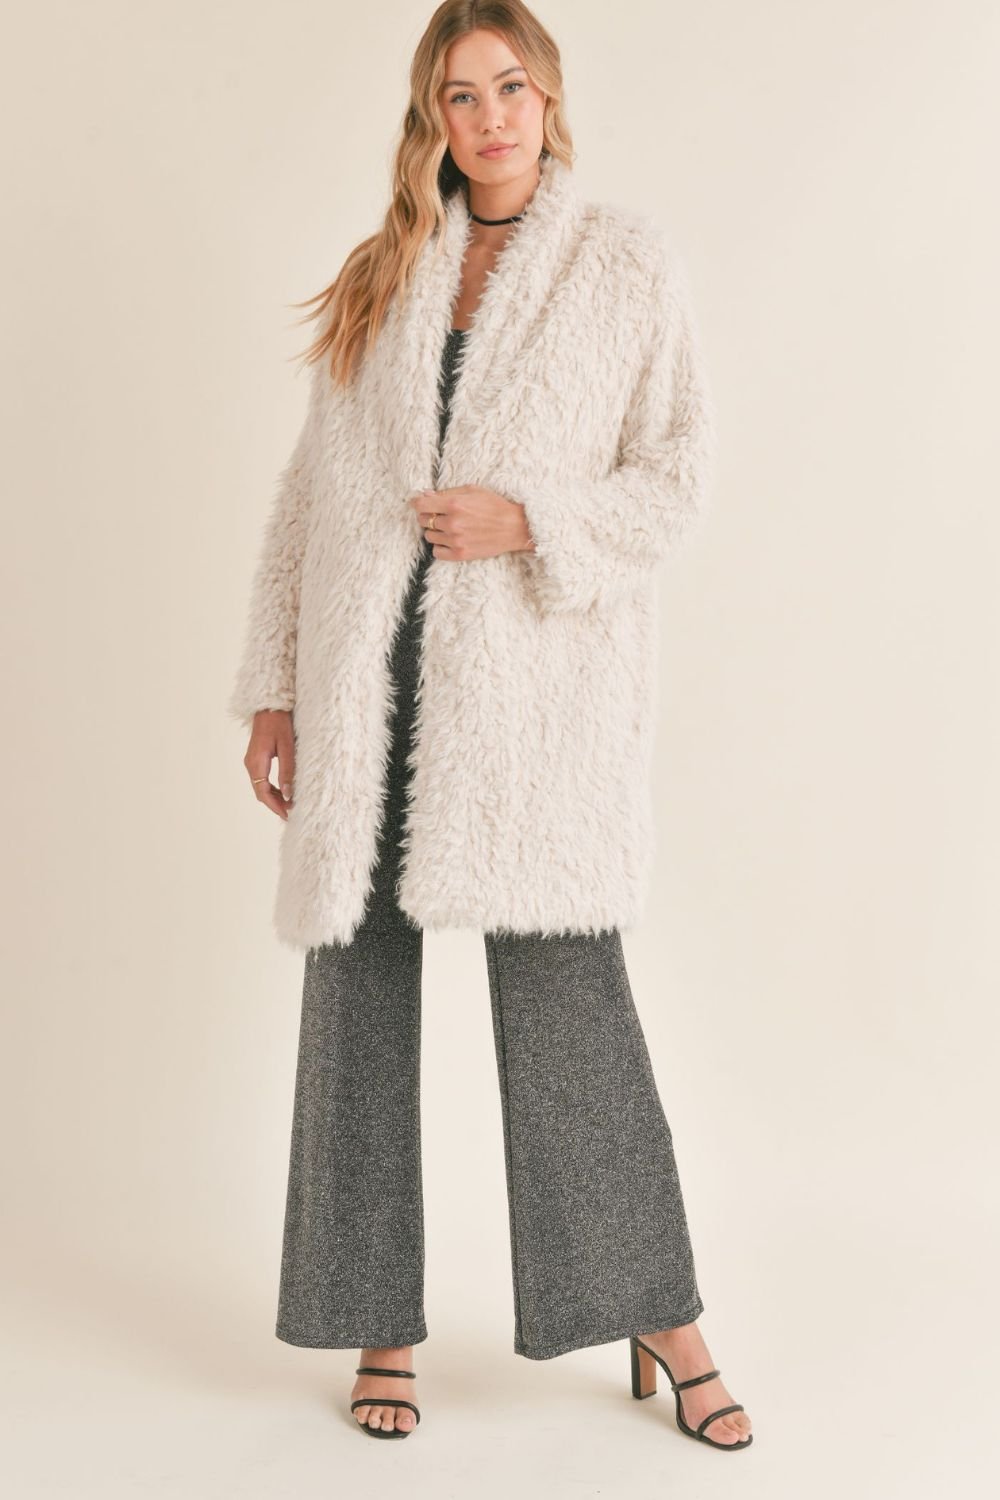 Women's Faux Fur Shaggy Long Coat | Ivory - Women's Coat - Blooming Daily